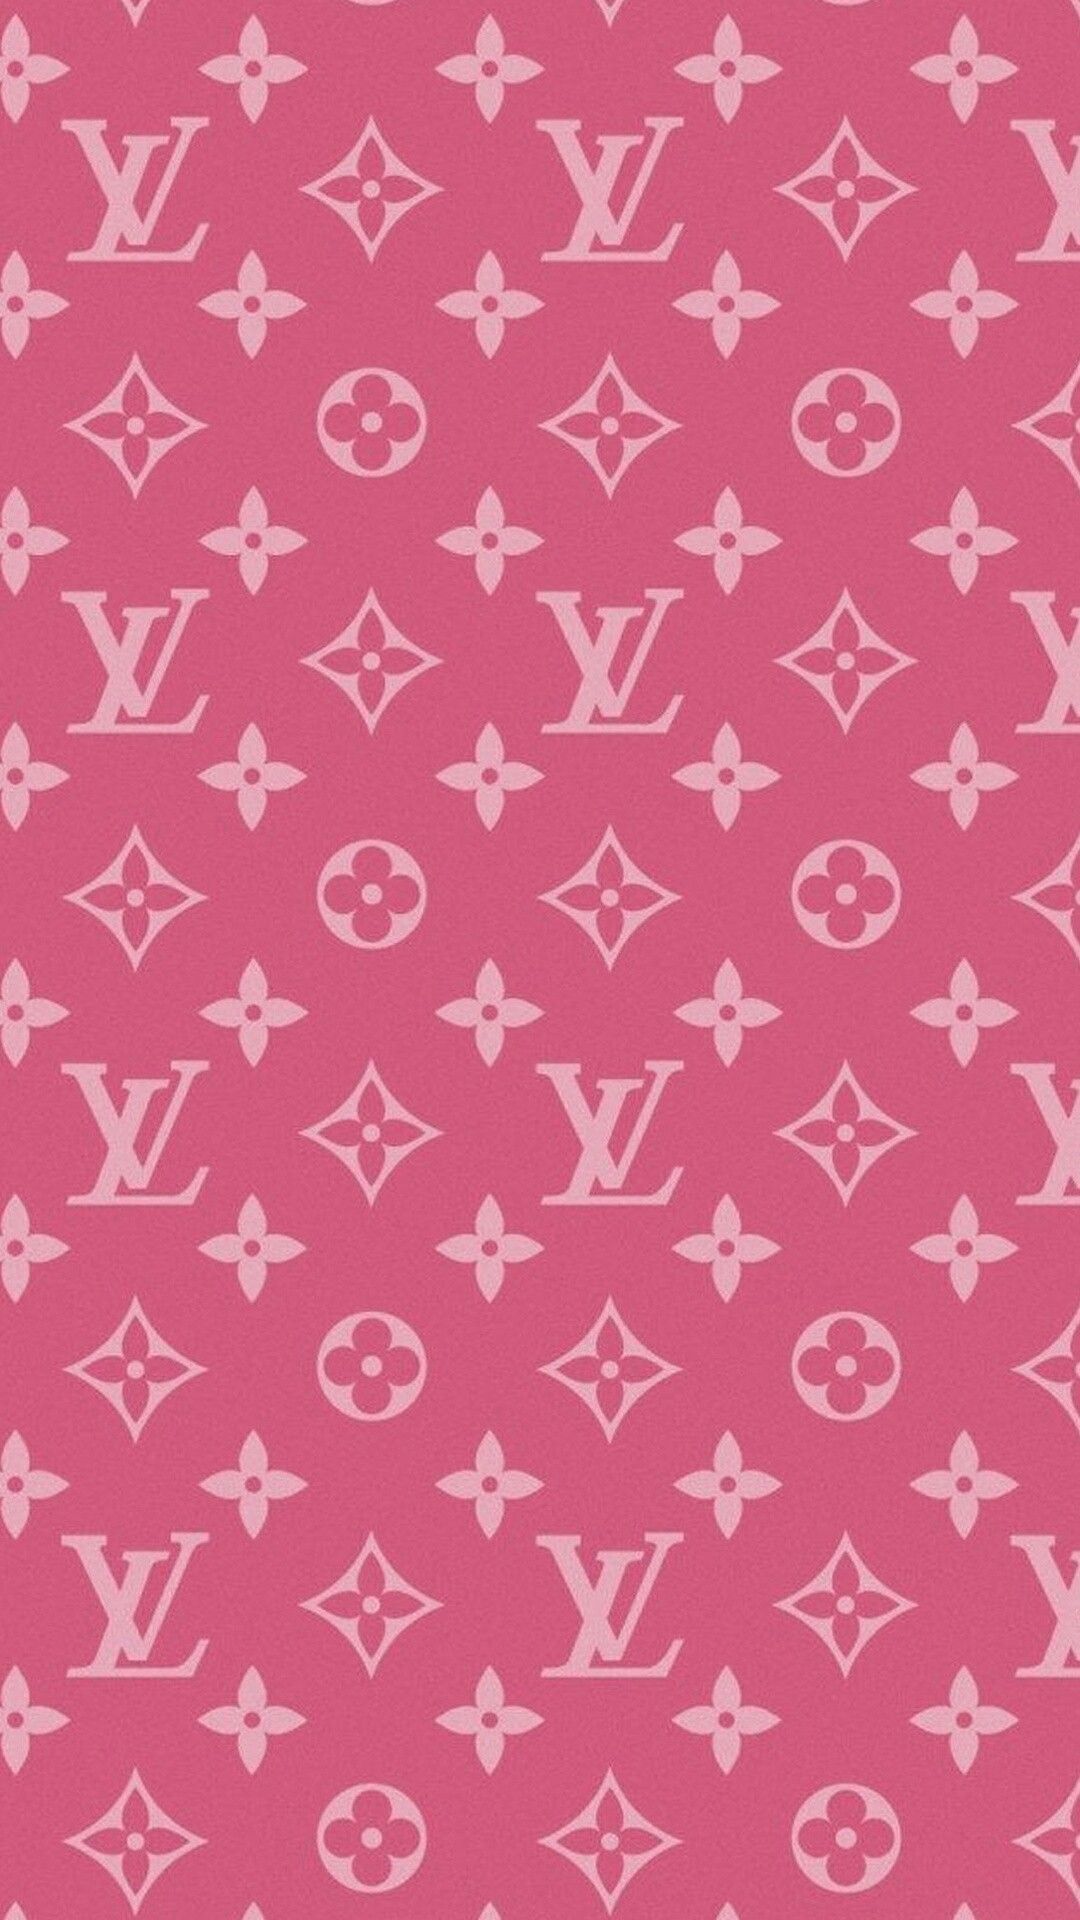 SupremexLouis Vuitton wallpaper by Jay2slimy - Download on ZEDGE™